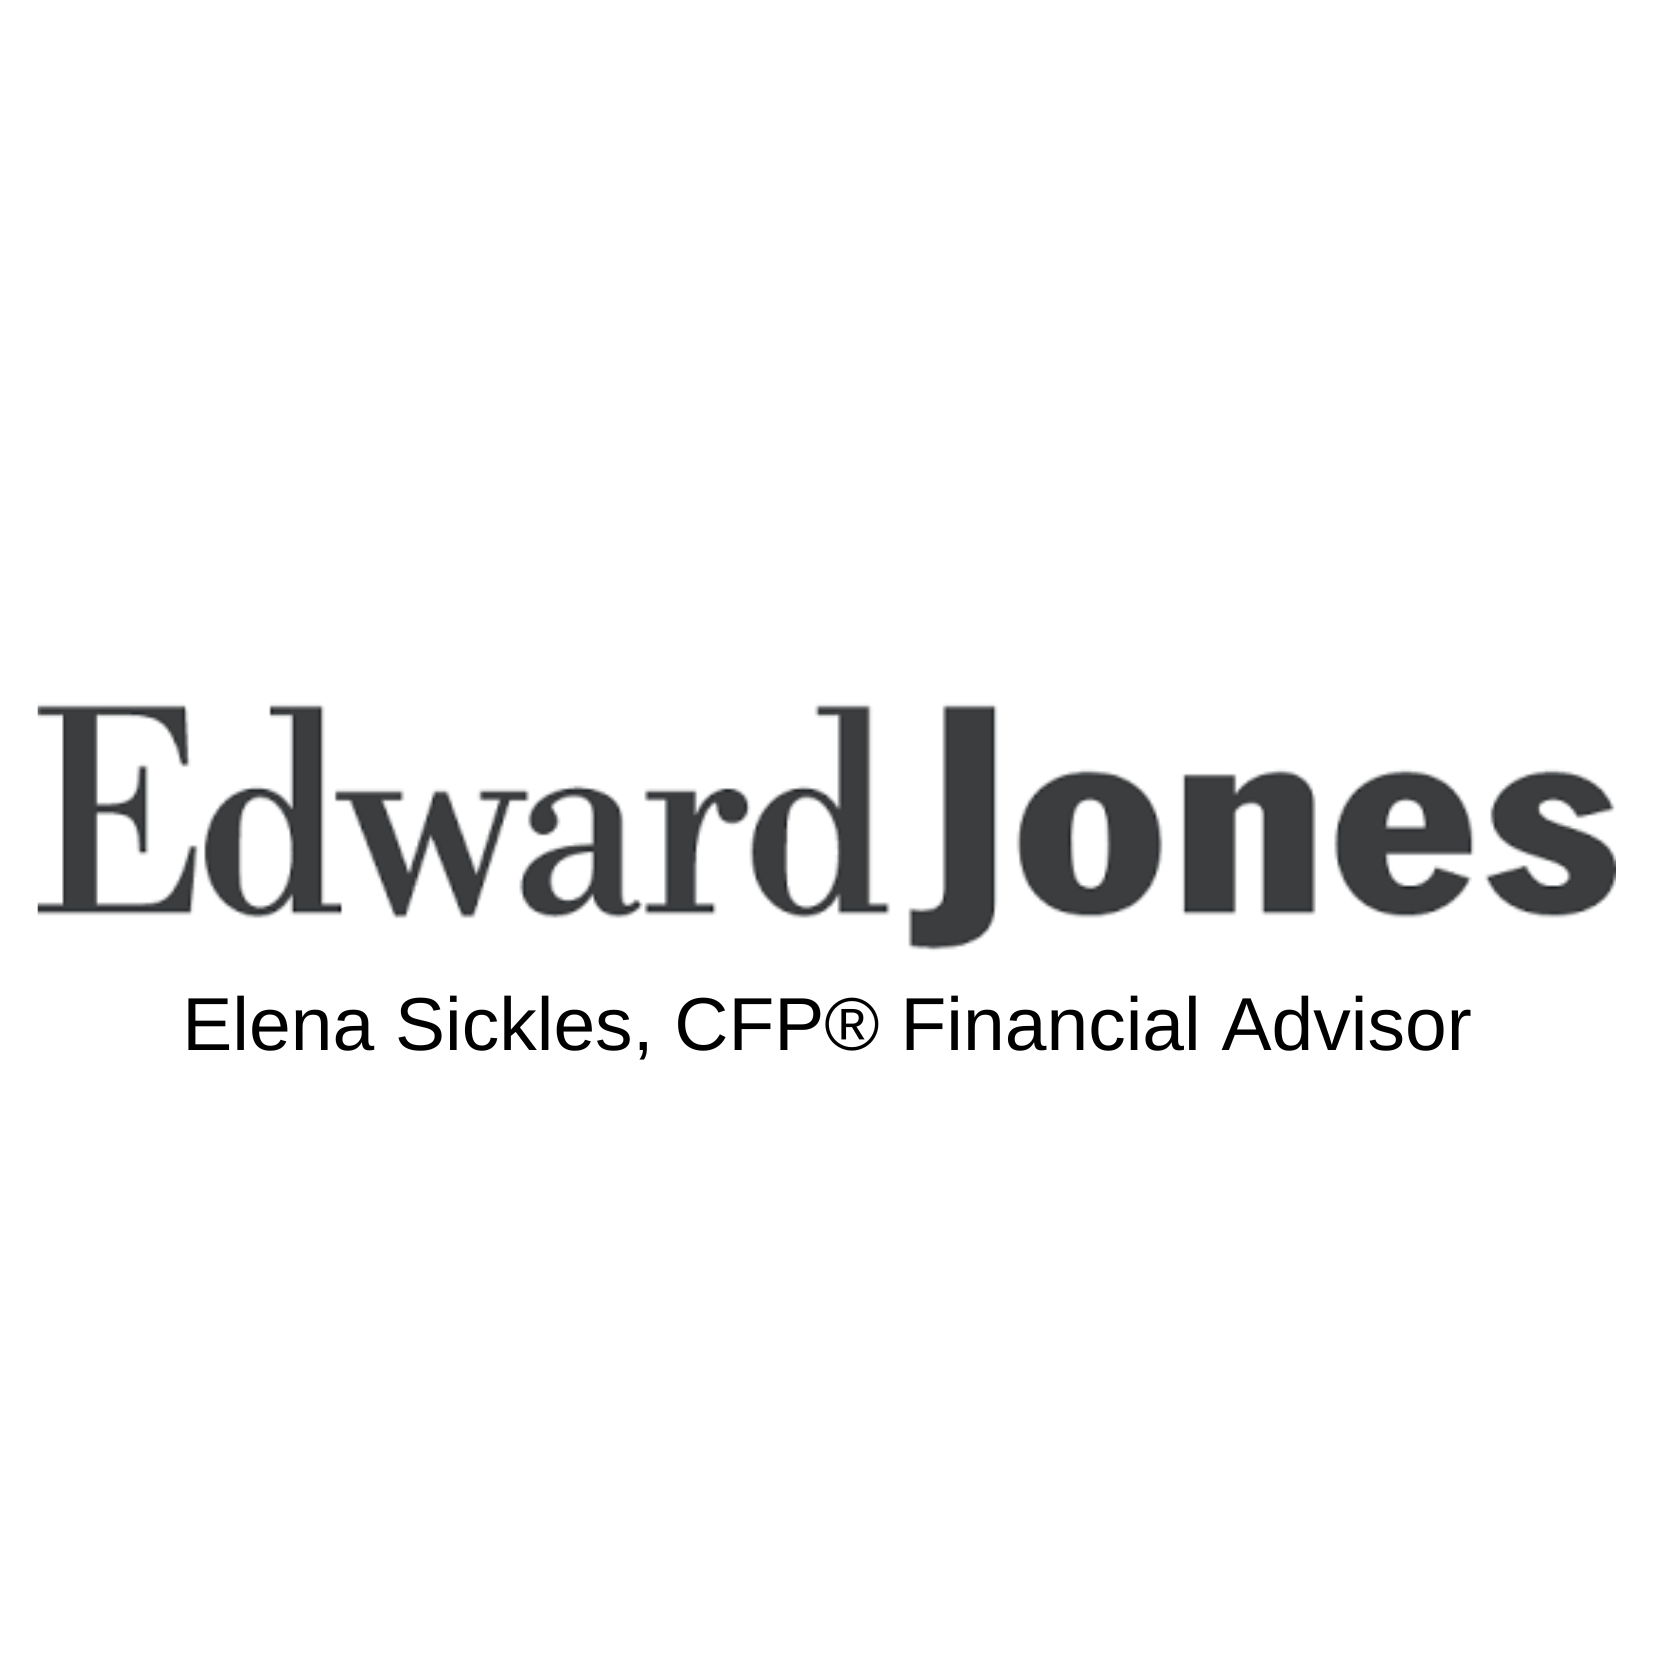 Edward Jones/Elena Sickles, CFP® Financial Advisor